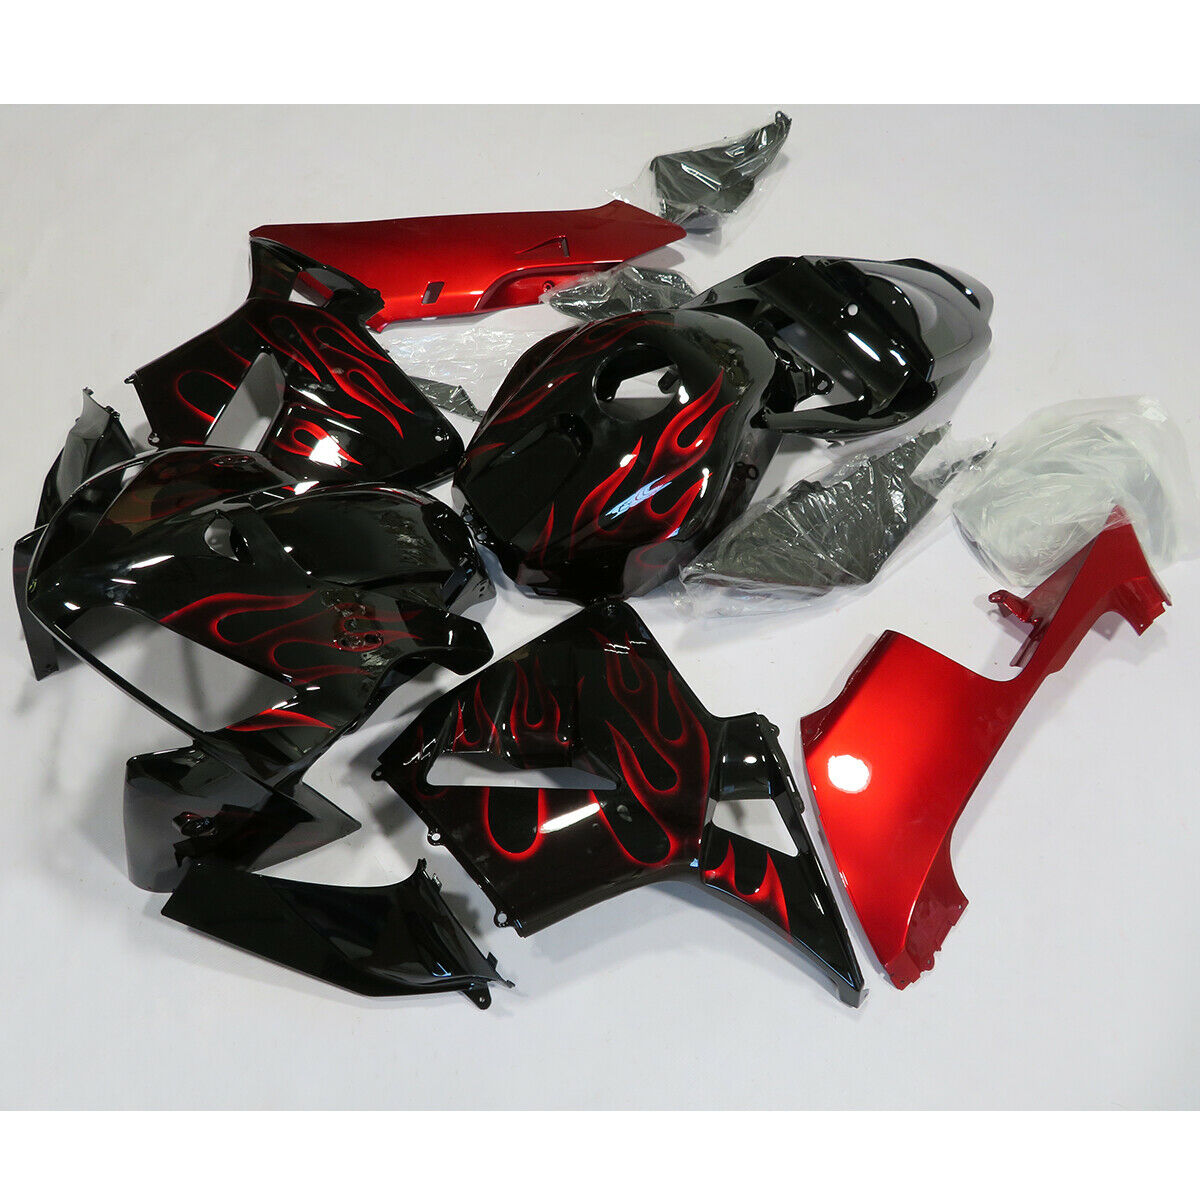 Kit de carenado Amotopart para Honda CBR600RR 2005 2006 F5 rojo negro ABS moldeado por inyección carrocería genérica